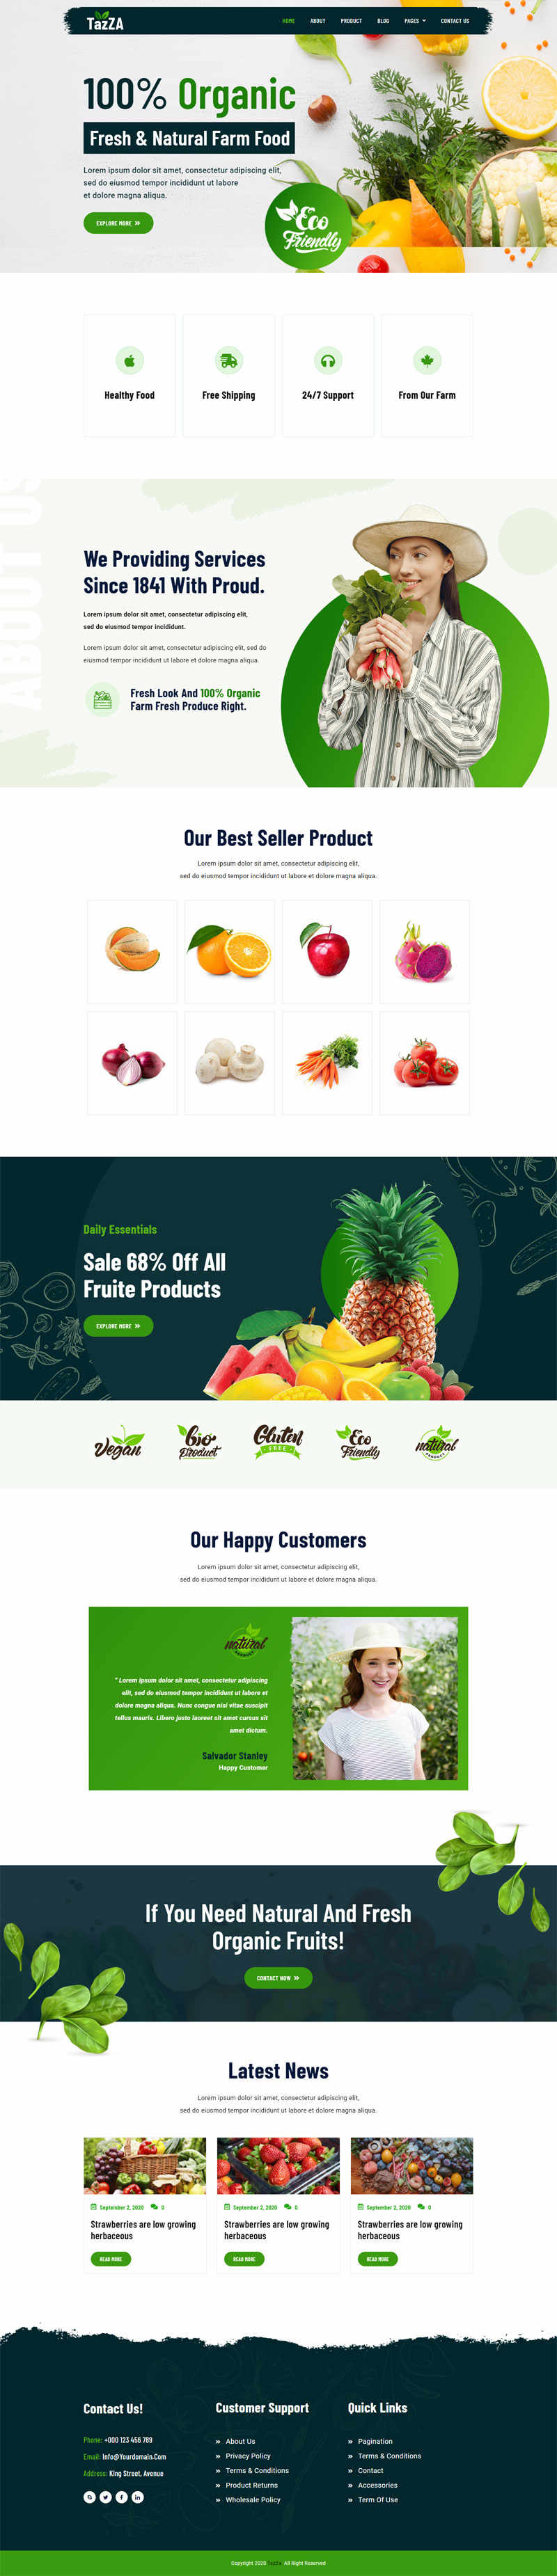 thiet ke website tmi organic food 150012